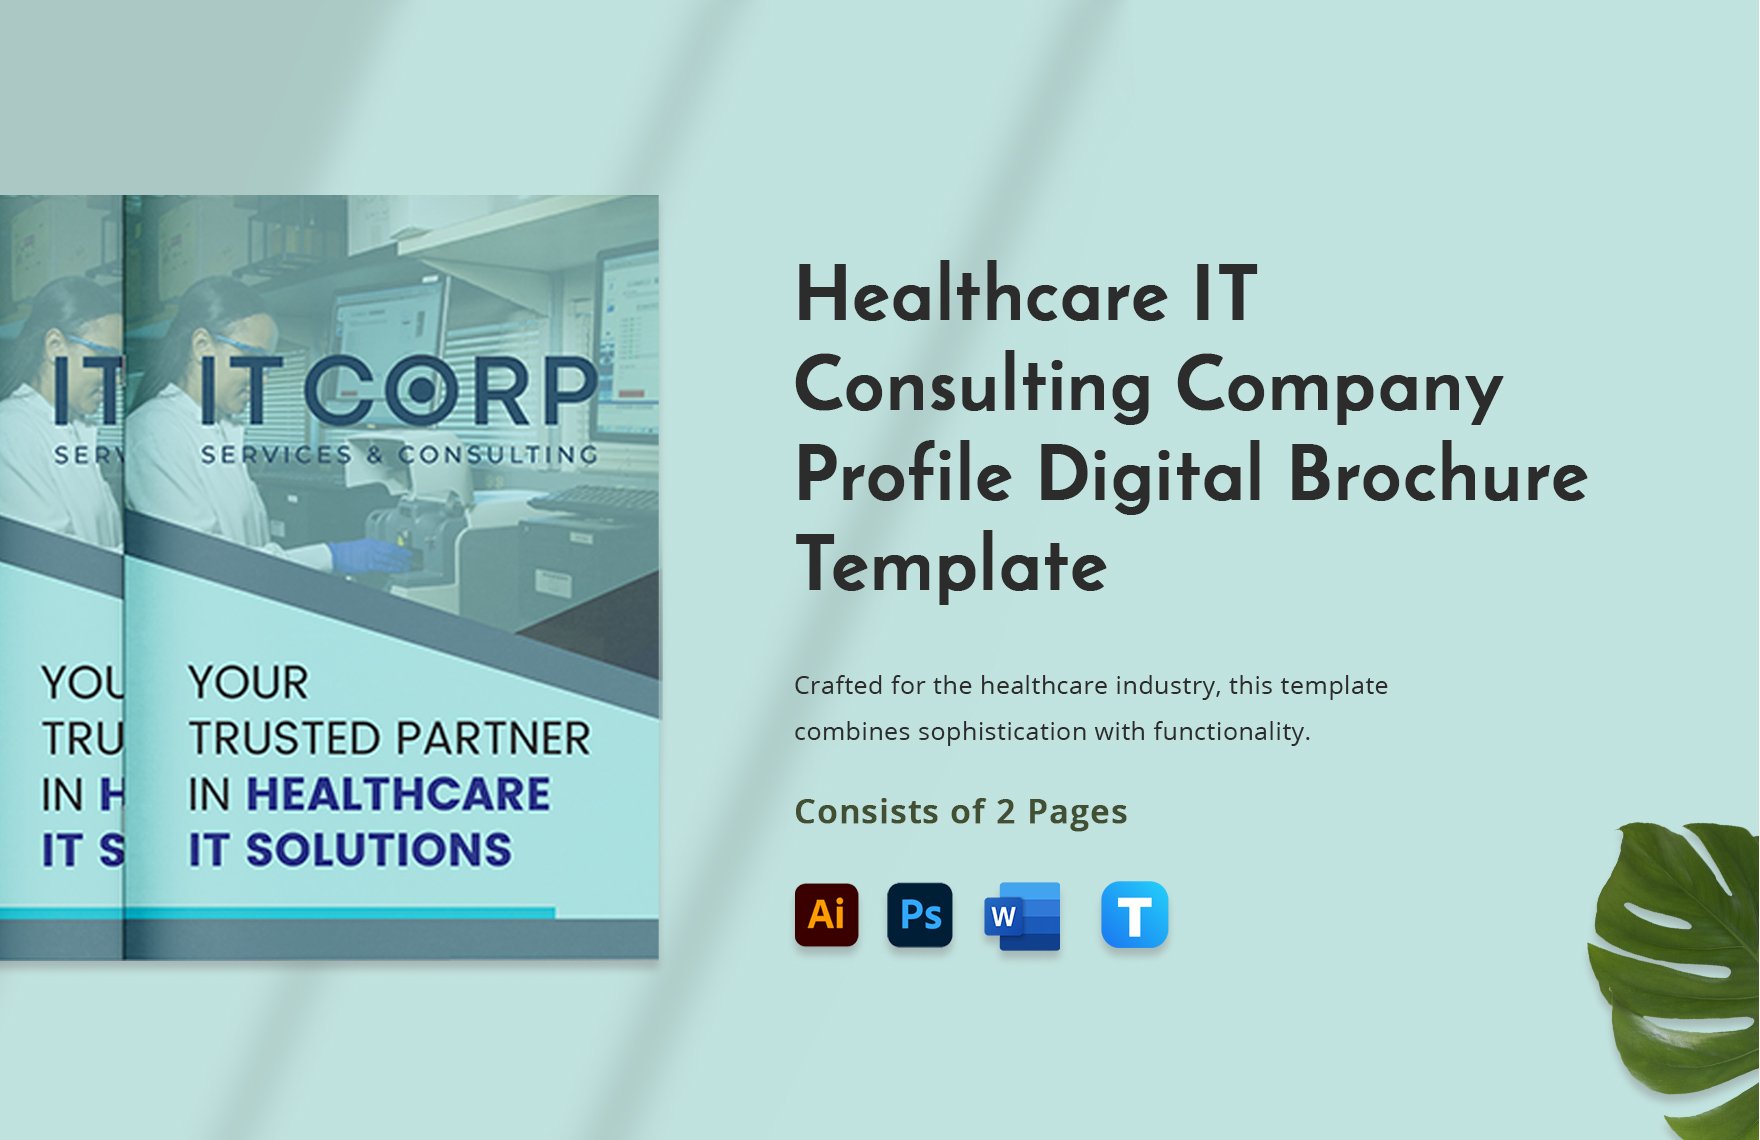 Healthcare IT Consulting Company Profile Digital Brochure Template